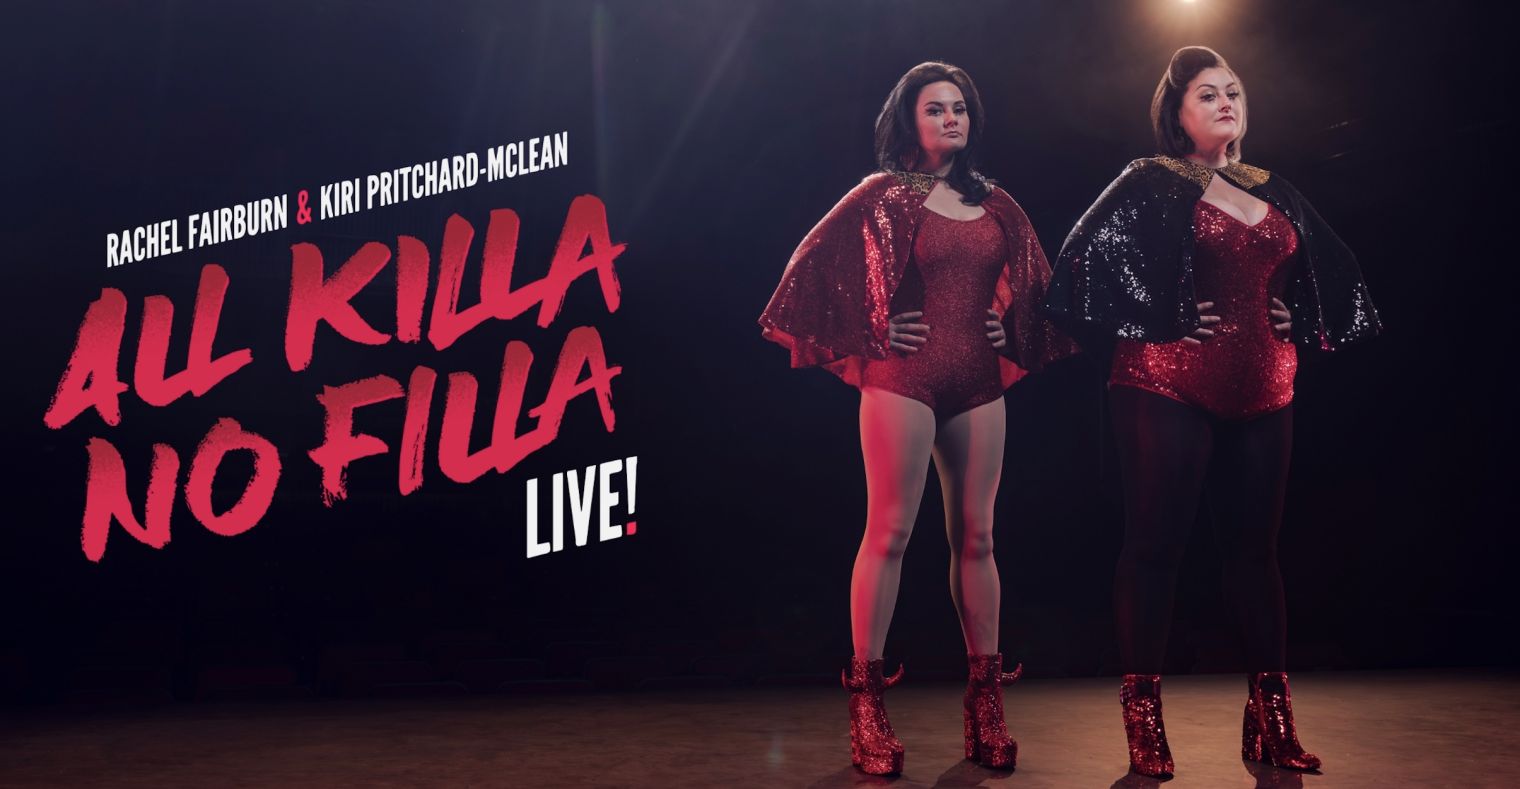 Rachel Fairburn begins her ‘All Killa No Filla’ UK tour tonight at London’s Hackney Empire